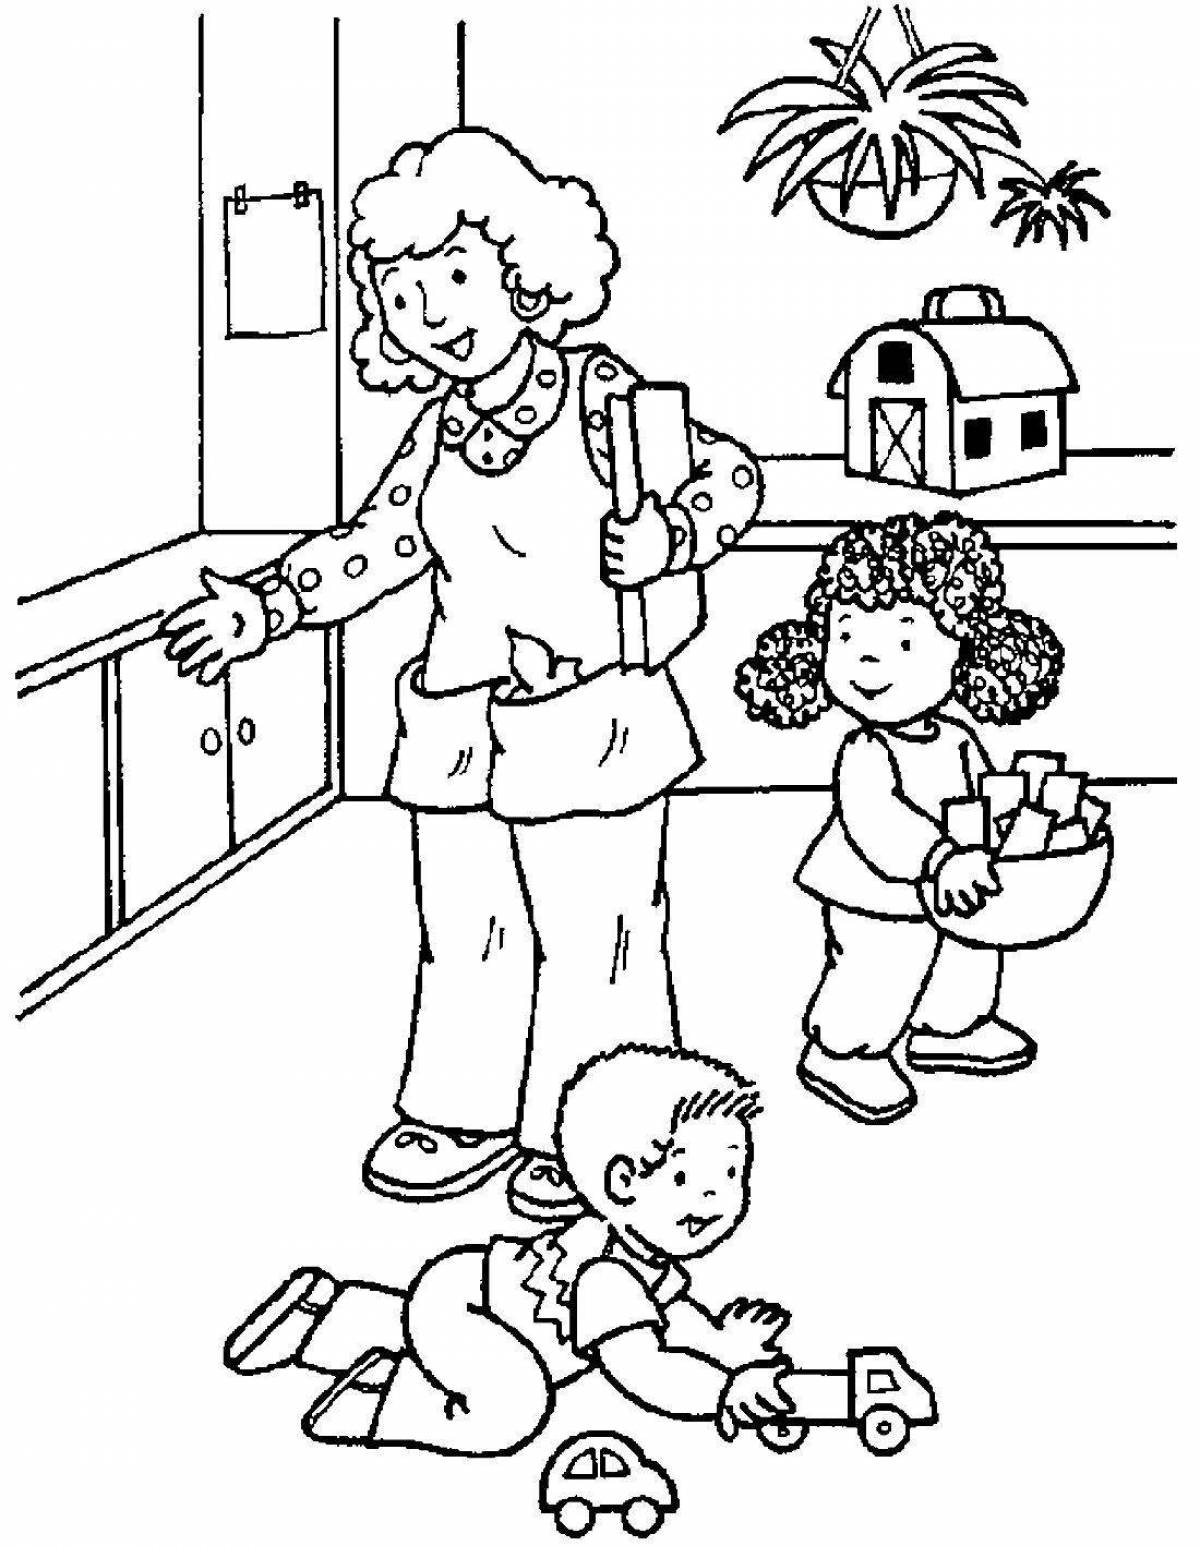 For children rules of conduct in kindergarten #4